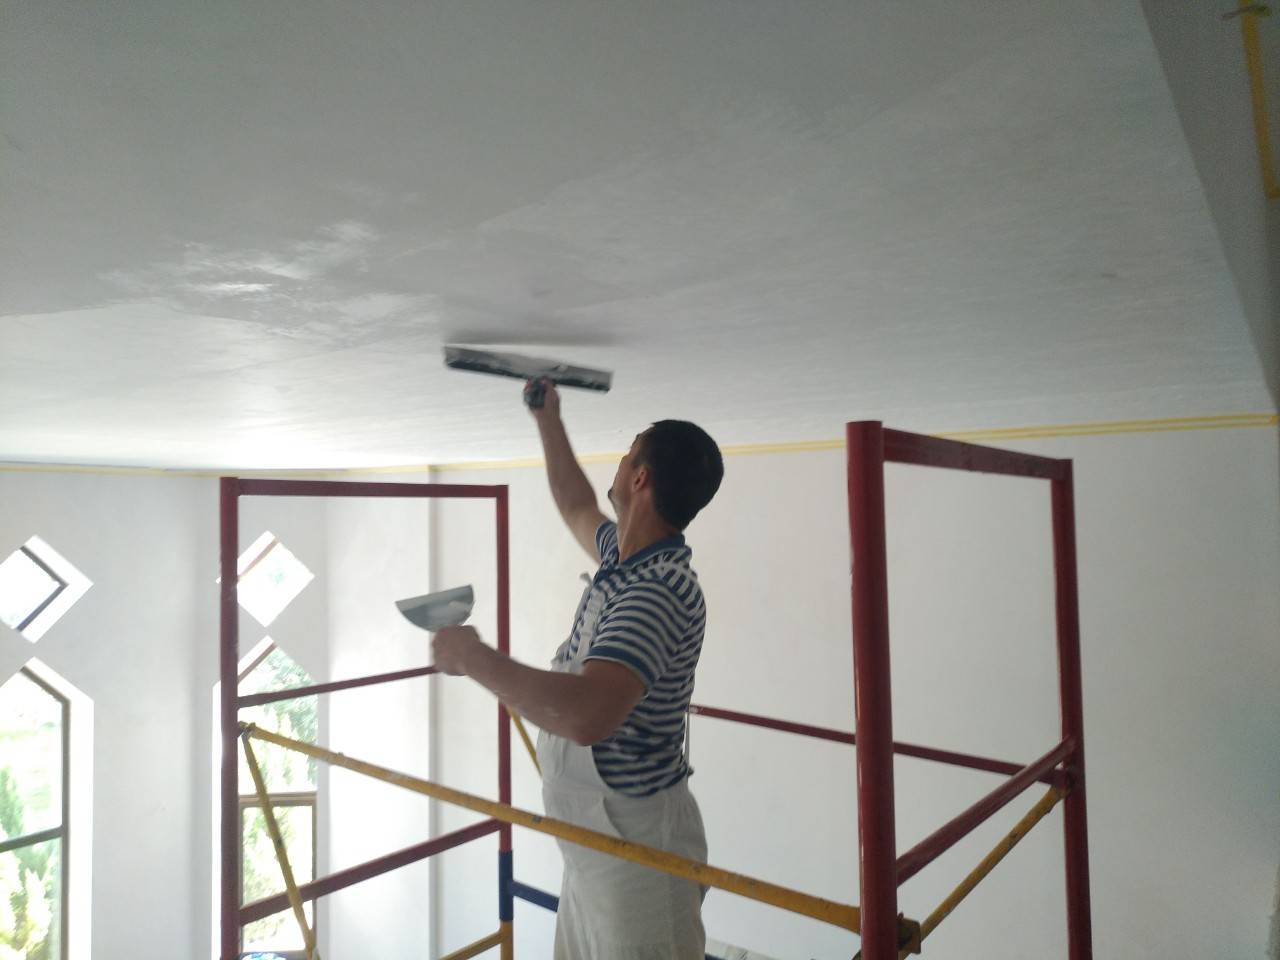 Процесс подготовки и покраски стен из гипсокартона